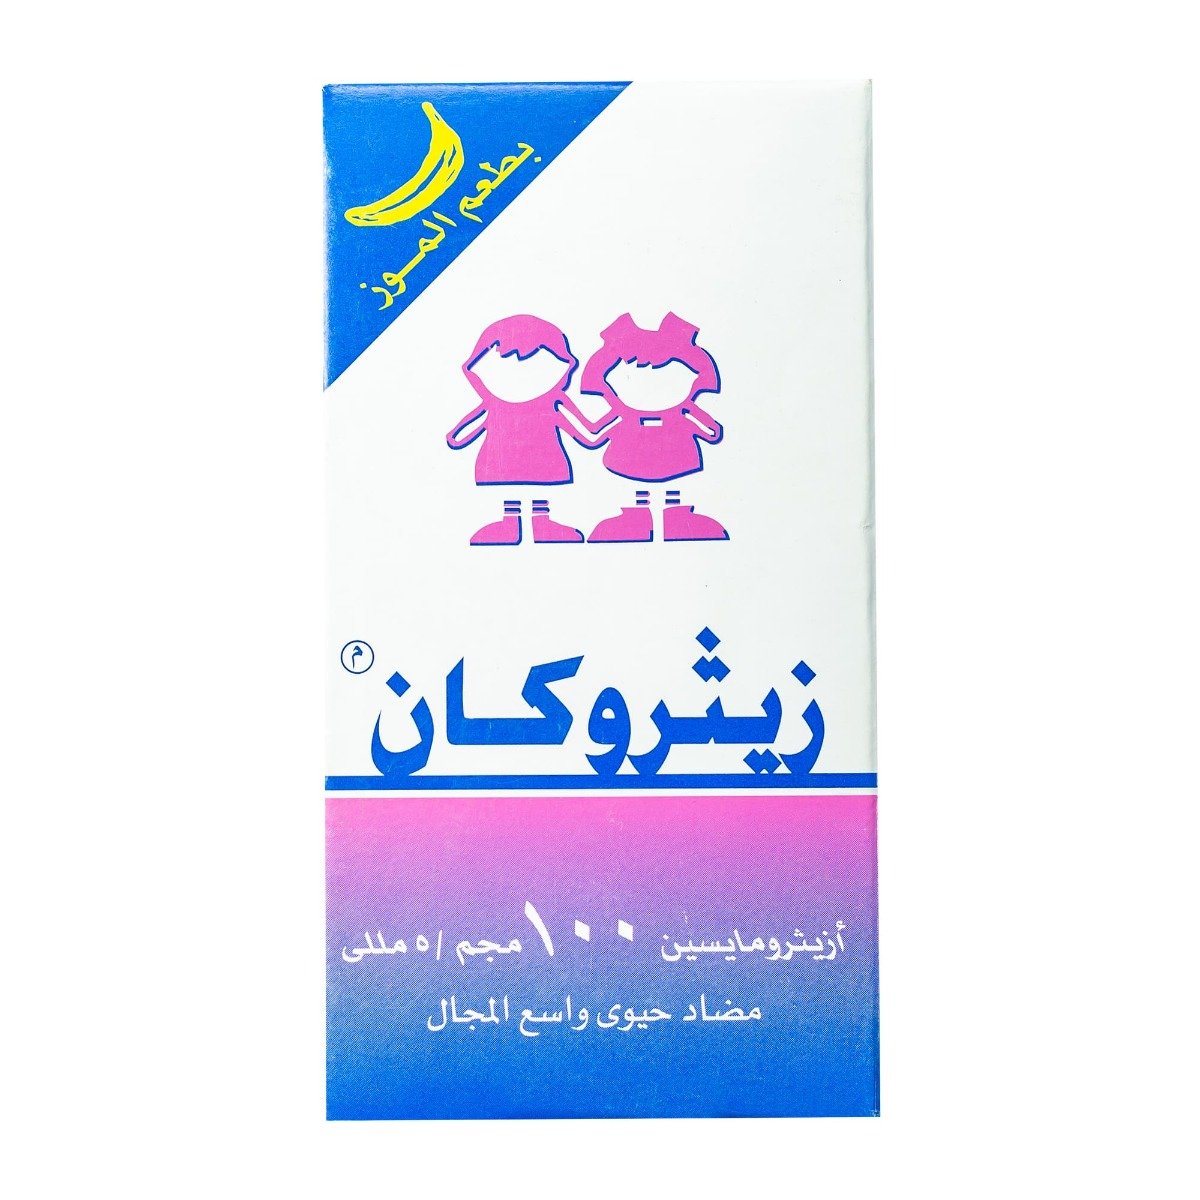 Zithrokan 100 mg-5 ml Suspension - 15 ml - Bloom Pharmacy